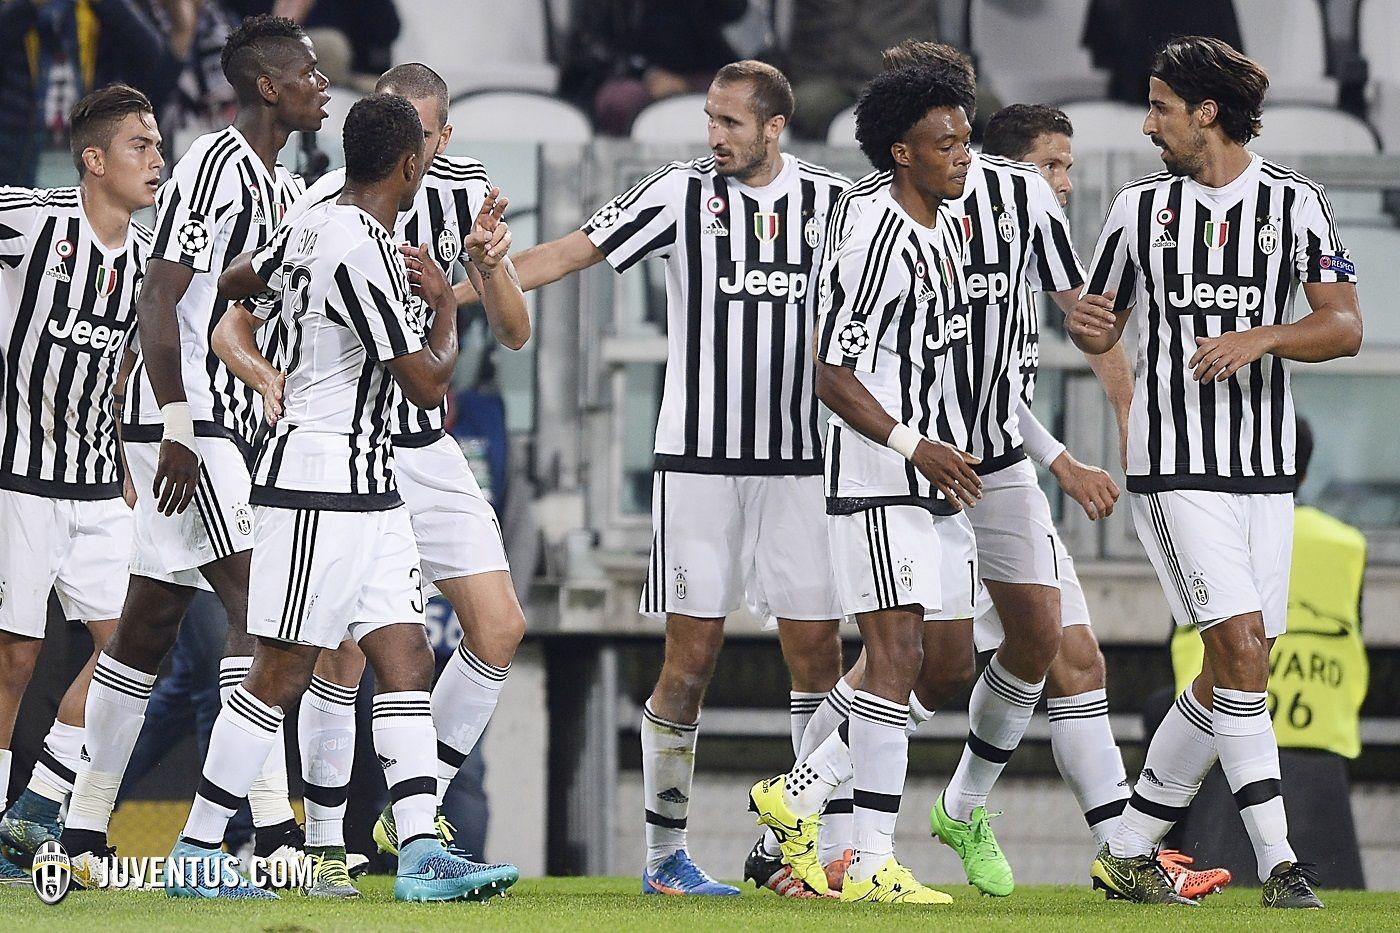 Juventus Champions League squad announced